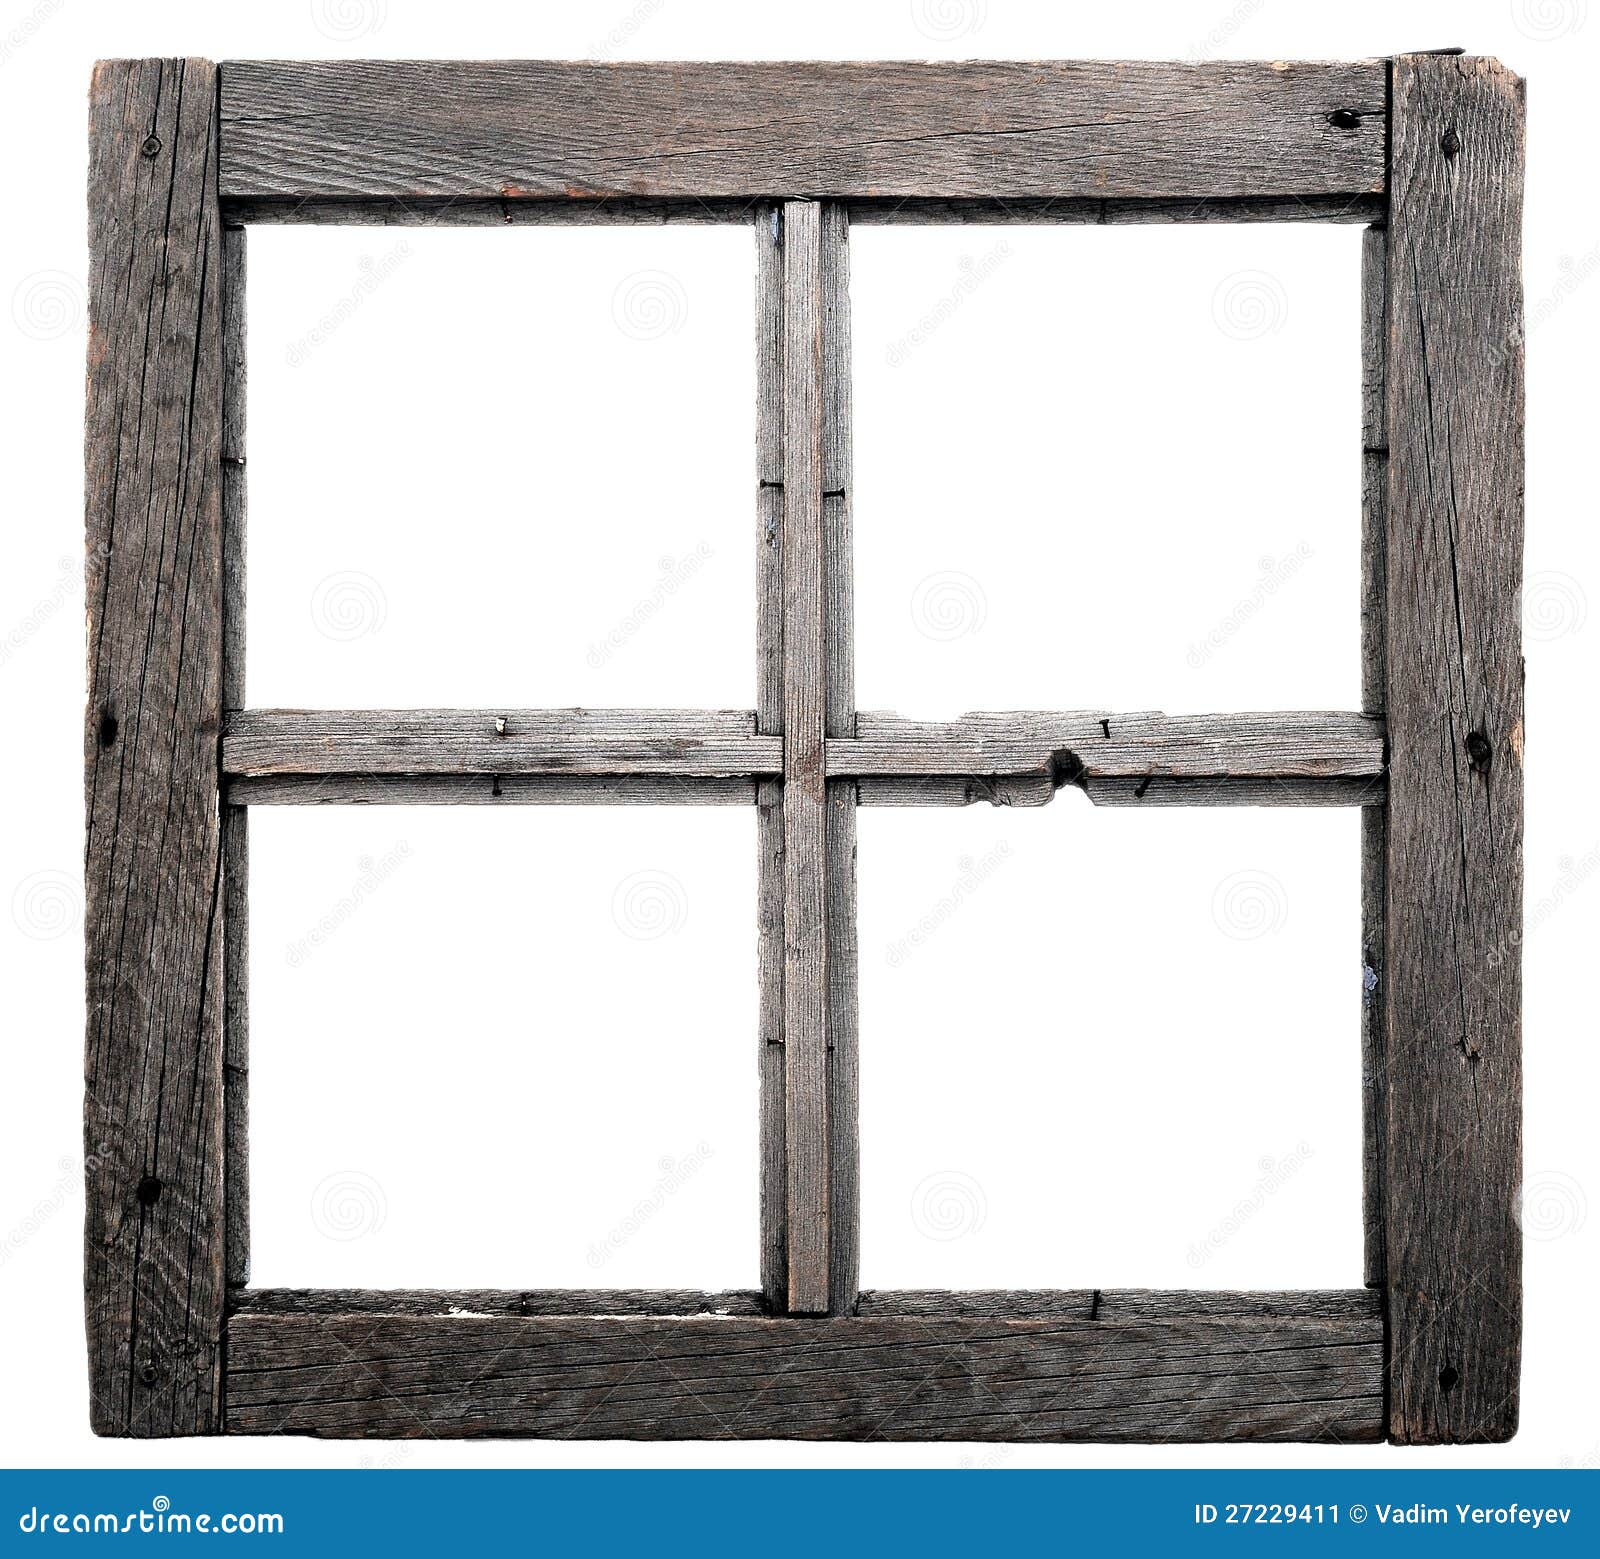 clipart window frames - photo #1